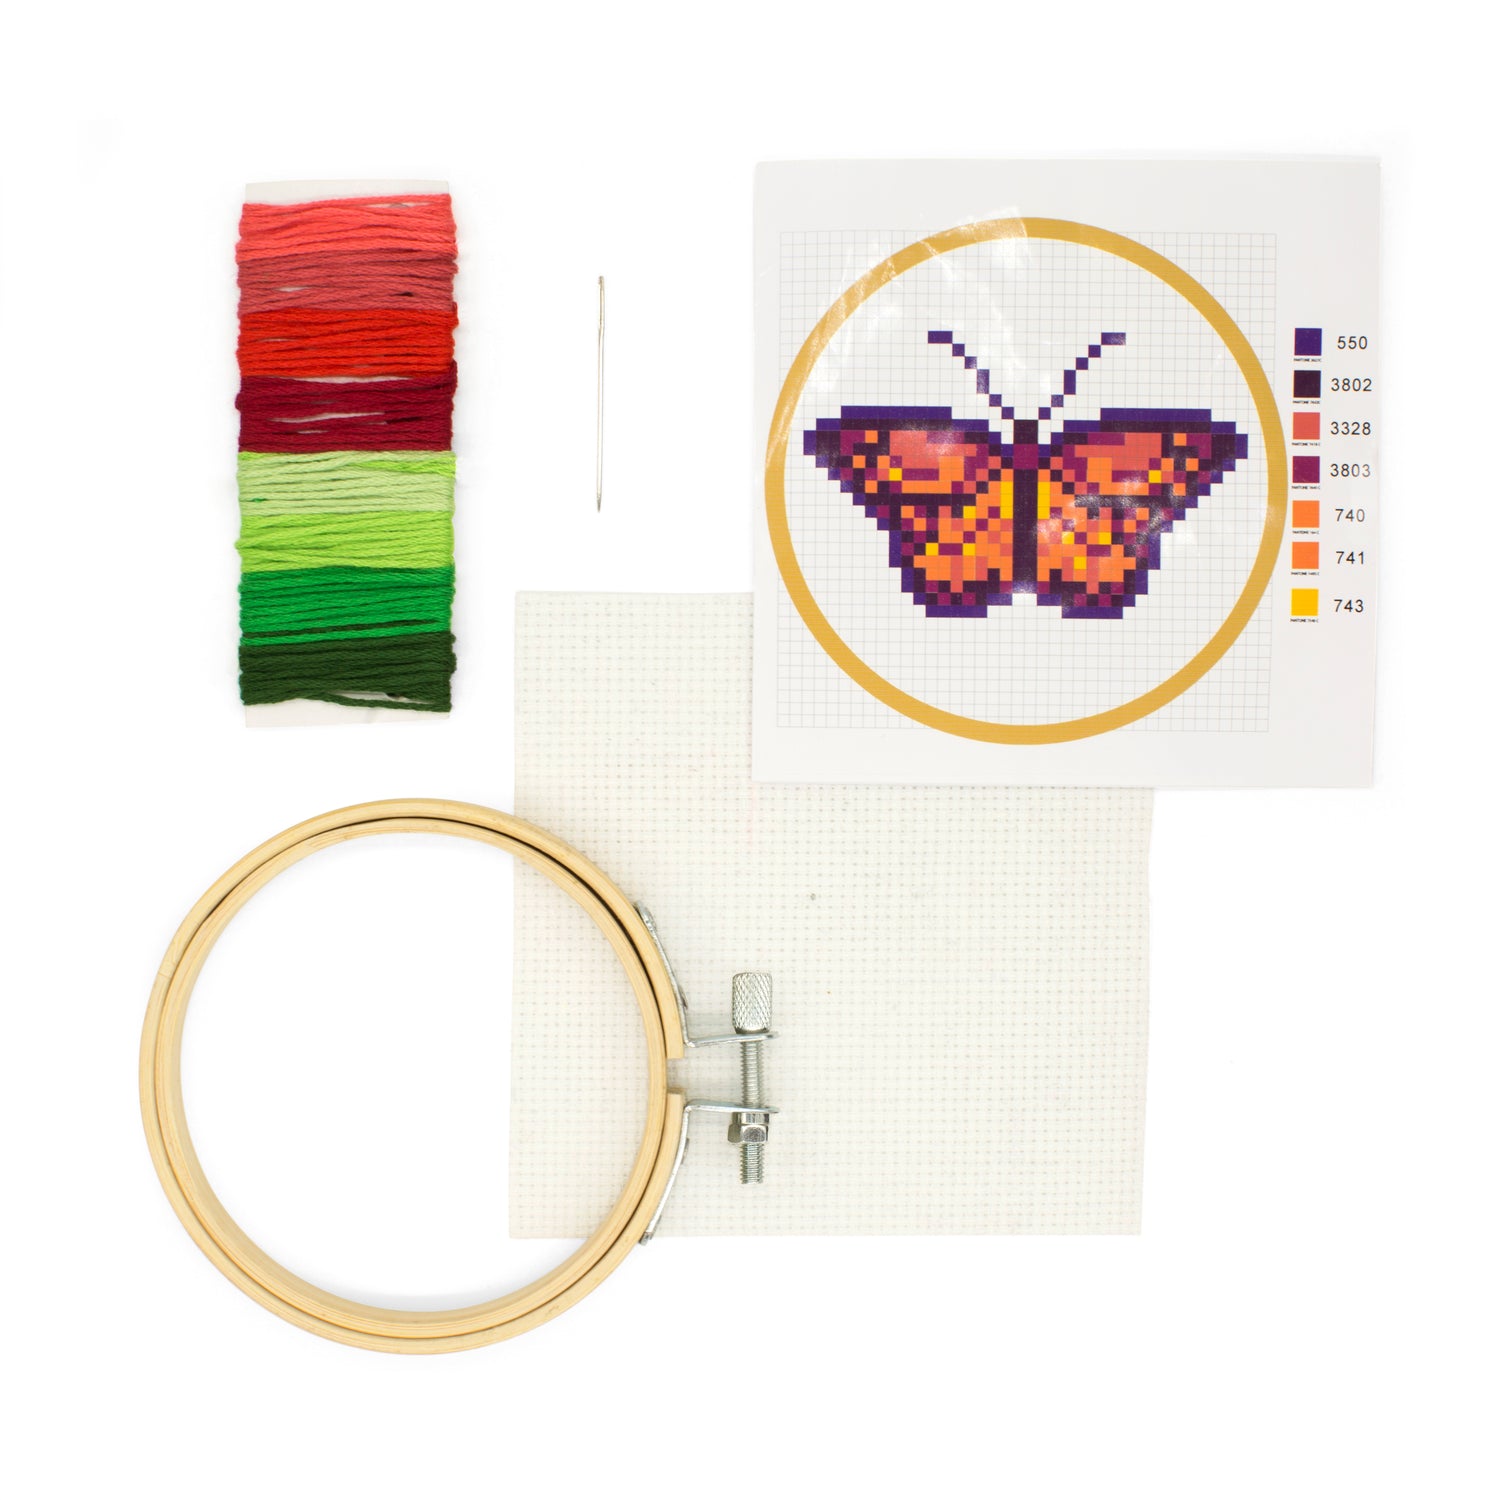 Butterfly Mini Cross Stitch Embroidery Kit